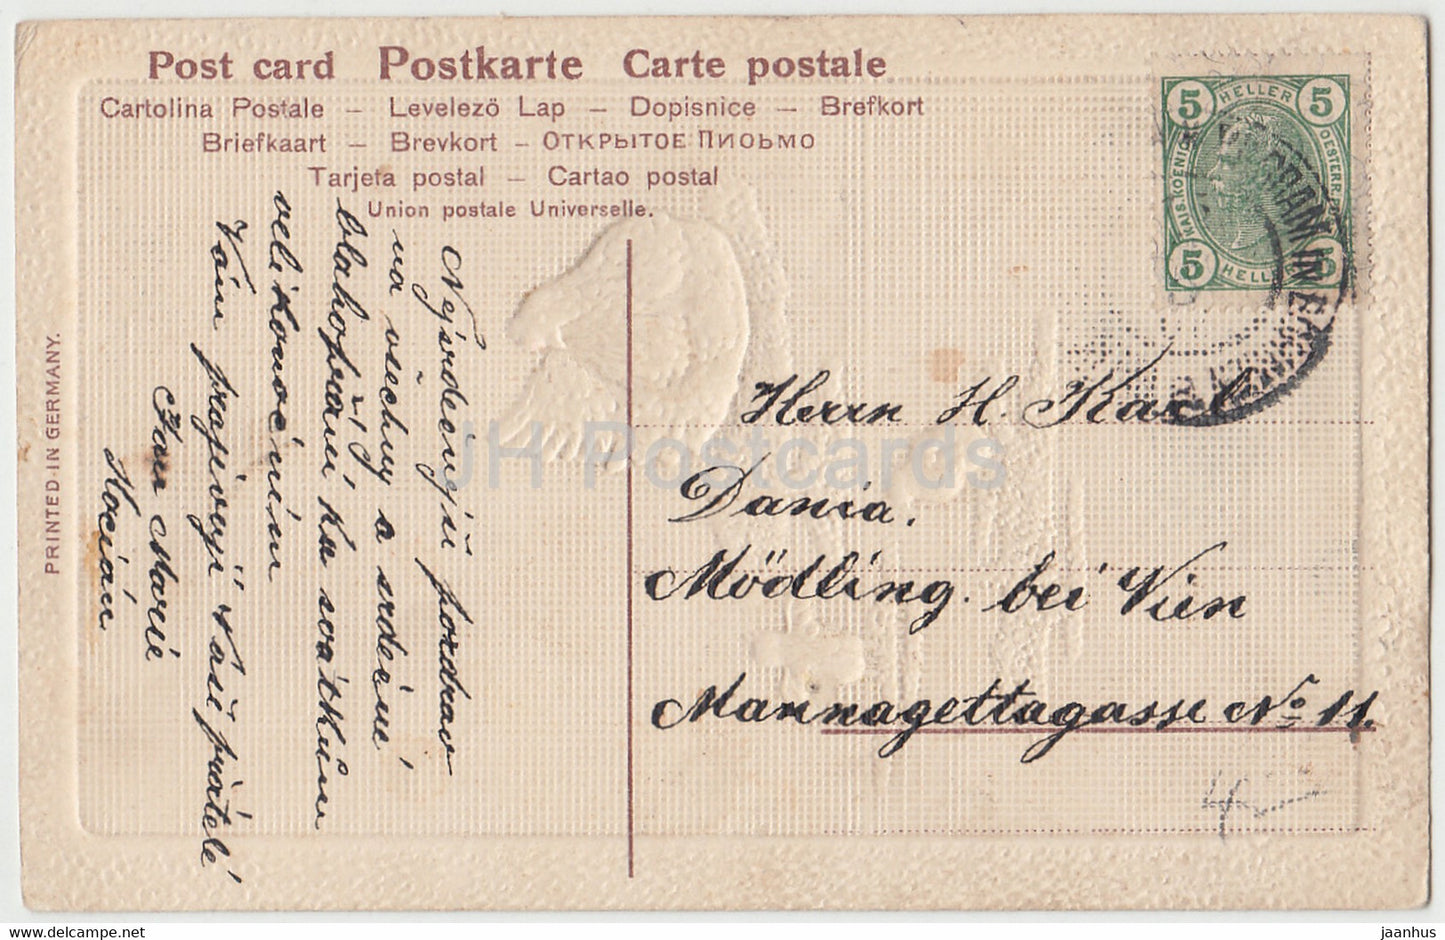 Ostergrußkarte – Vesele Velikonoce – Huhn – Ser 350 – alte Postkarte – Deutschland – gebraucht